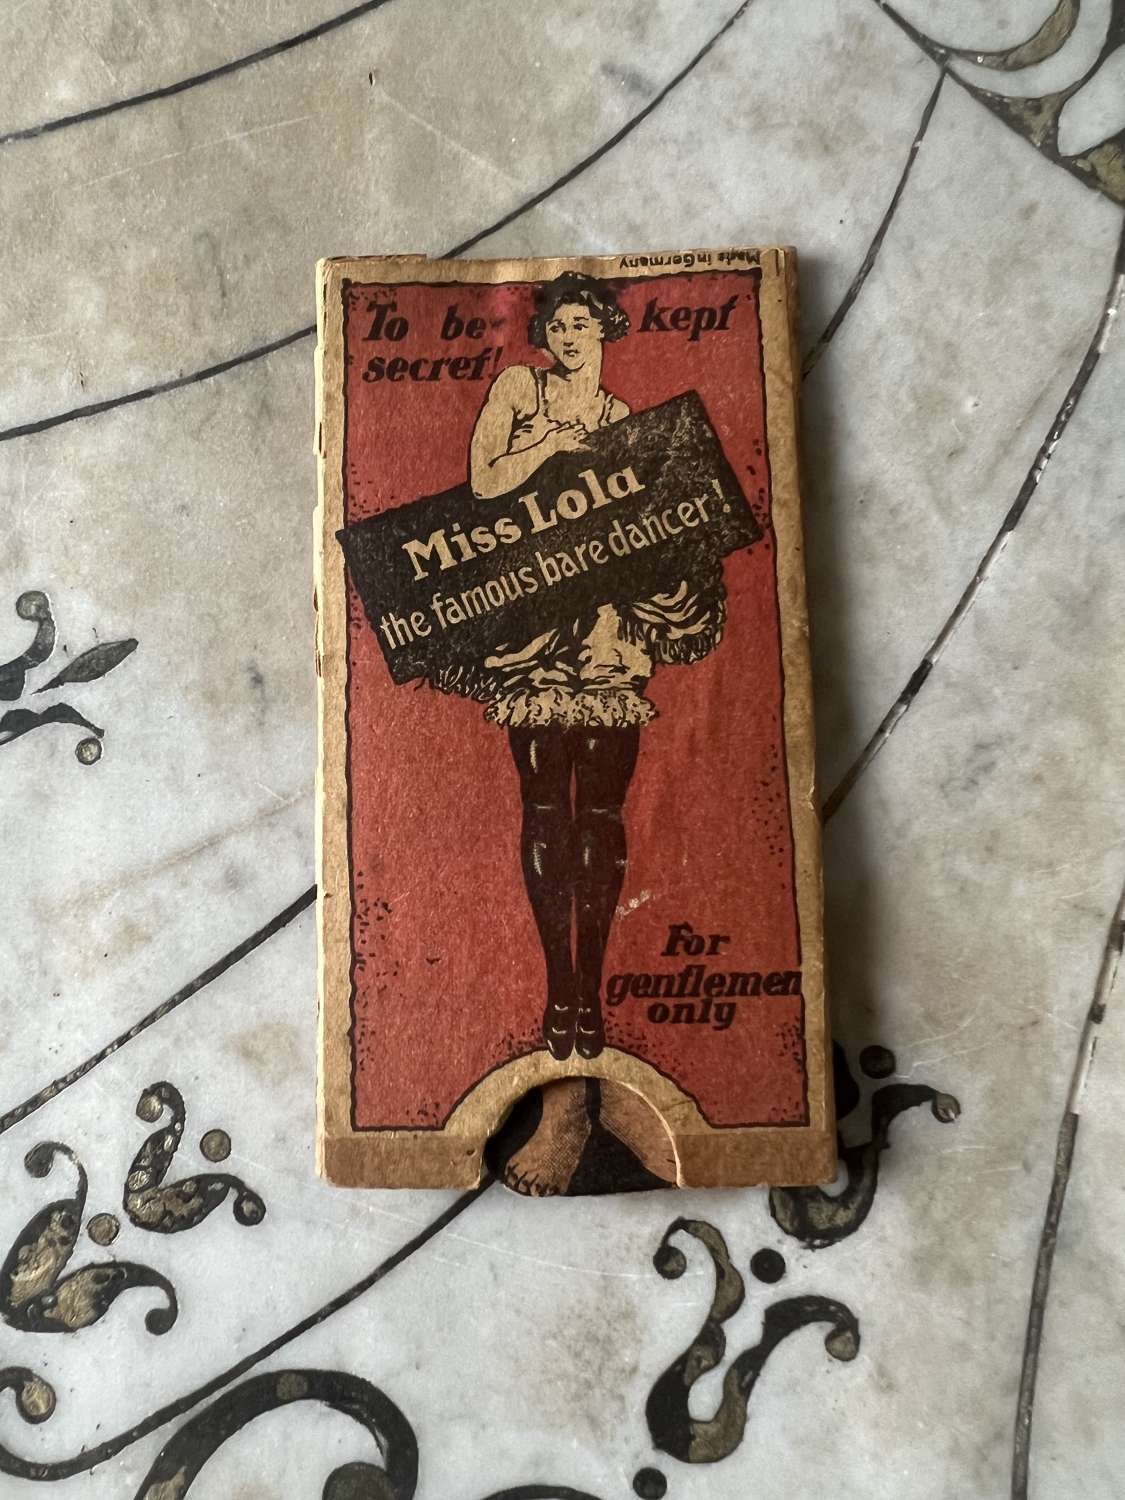 Edwardian Risque Card Joke - Miss Lola the famous bare dancer